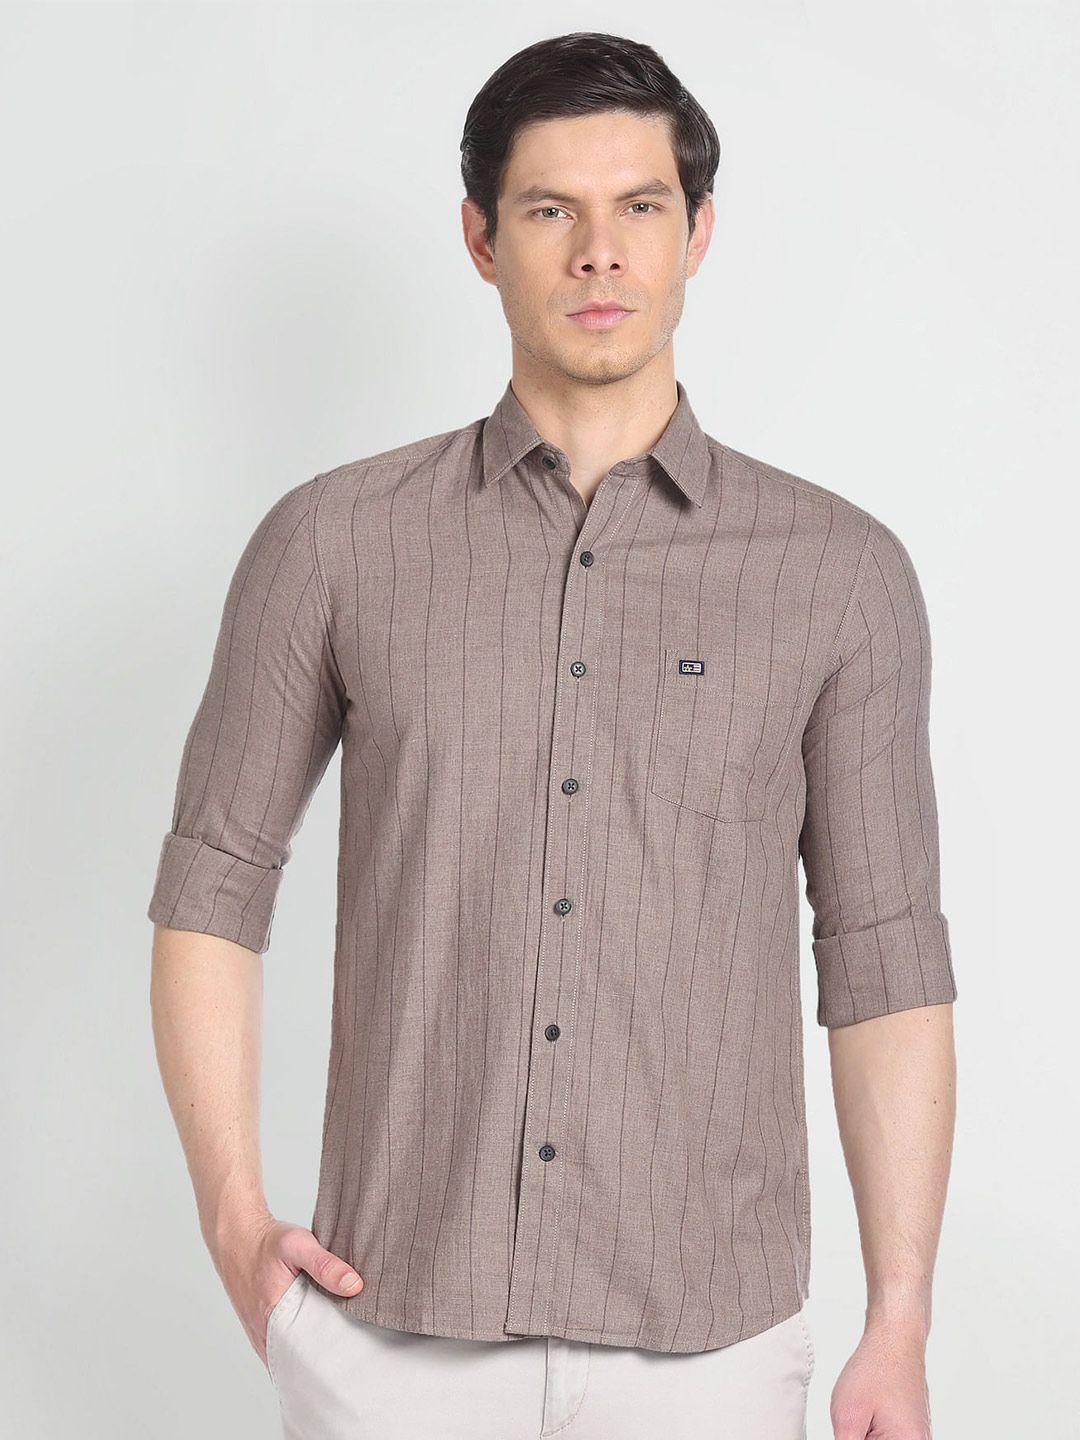 arrow-sport-spread-collar-slim-fit-striped-twill-casual-pure-cotton-shirt